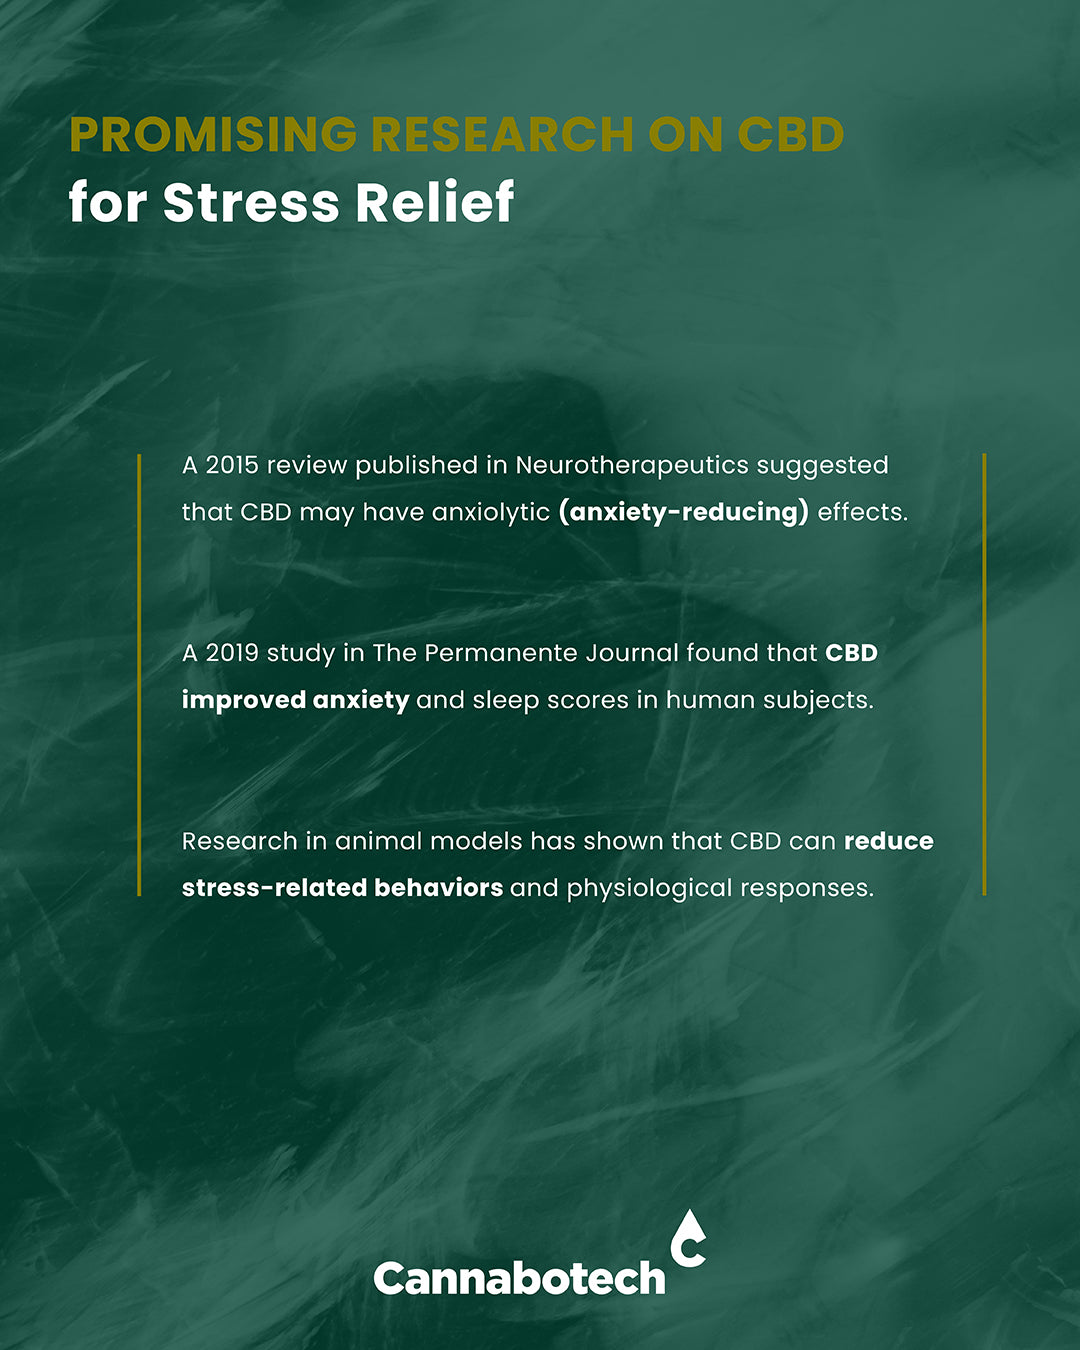 CBD for stress relief